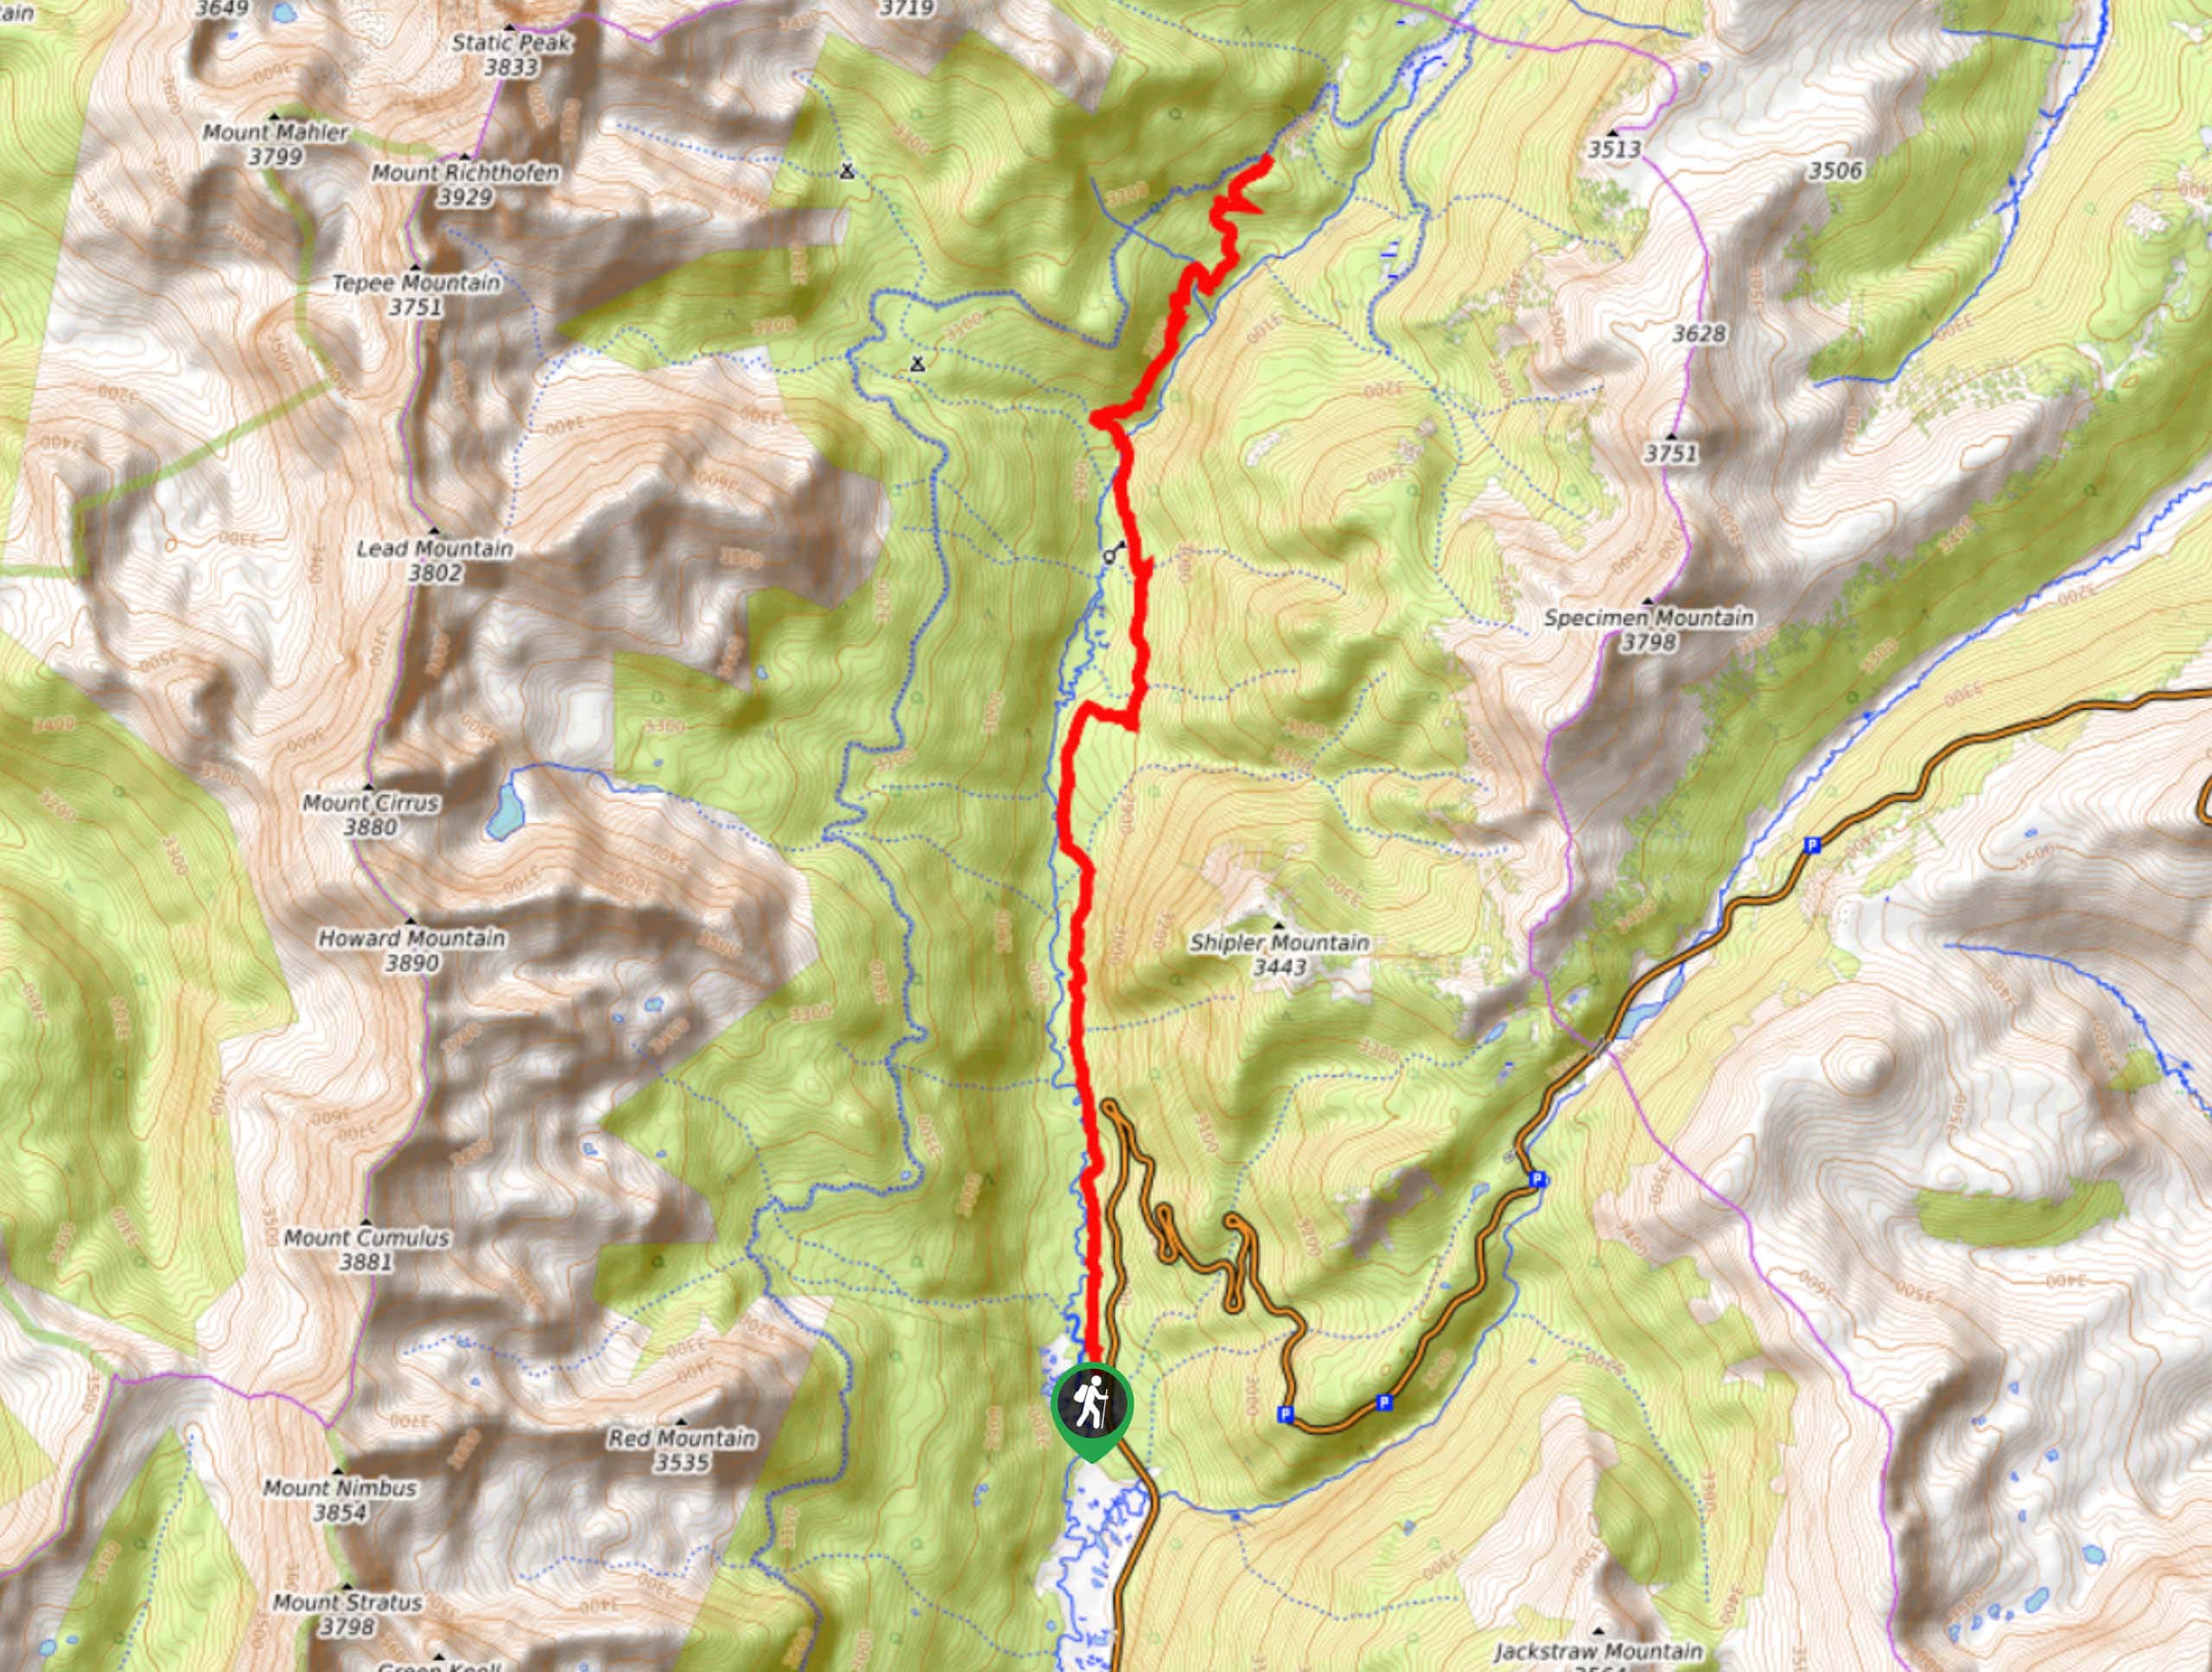 US CO RMNP Little Yellowstone Trail Map Image 2560x1935 1 